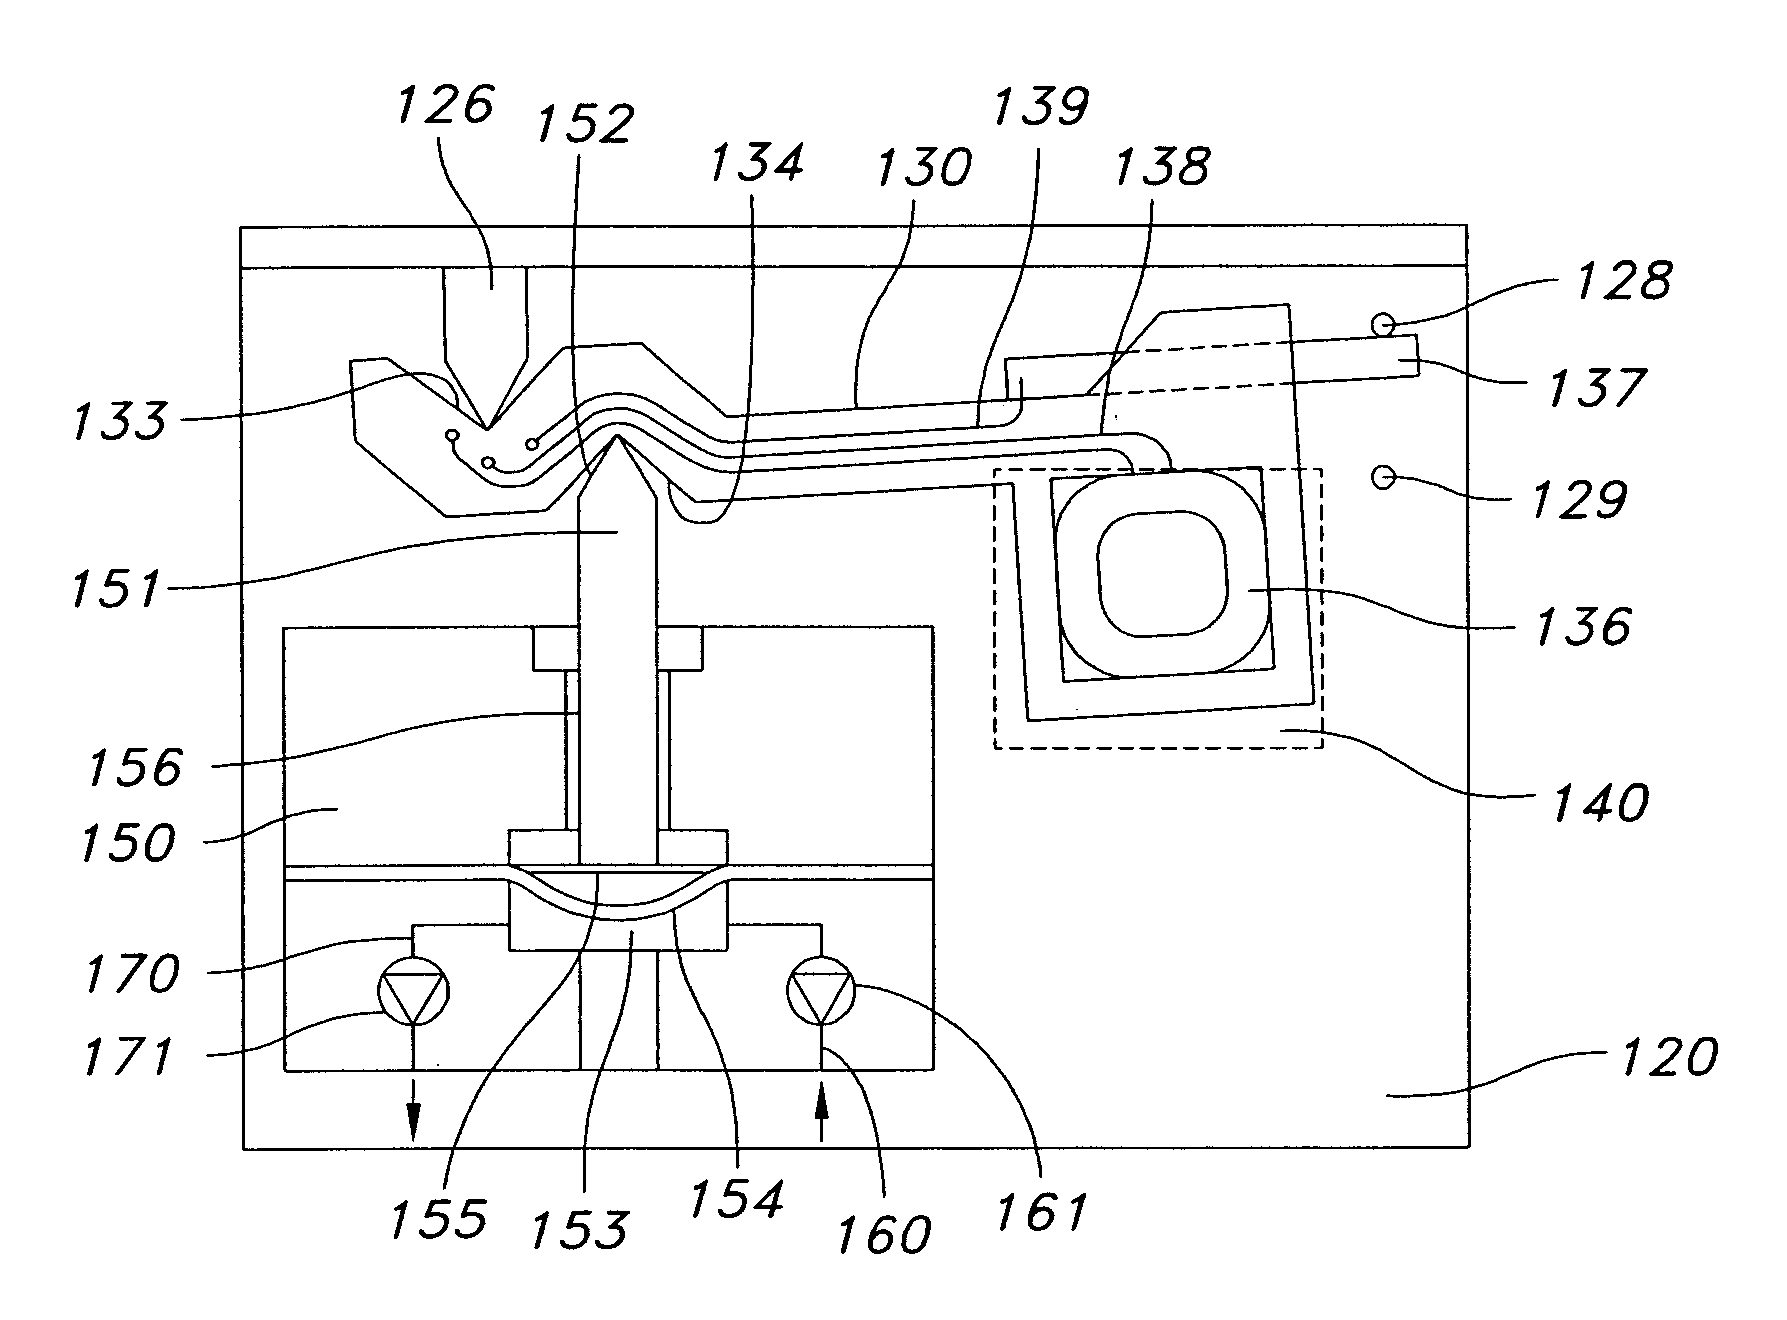 Actuator system comprising lever mechanism